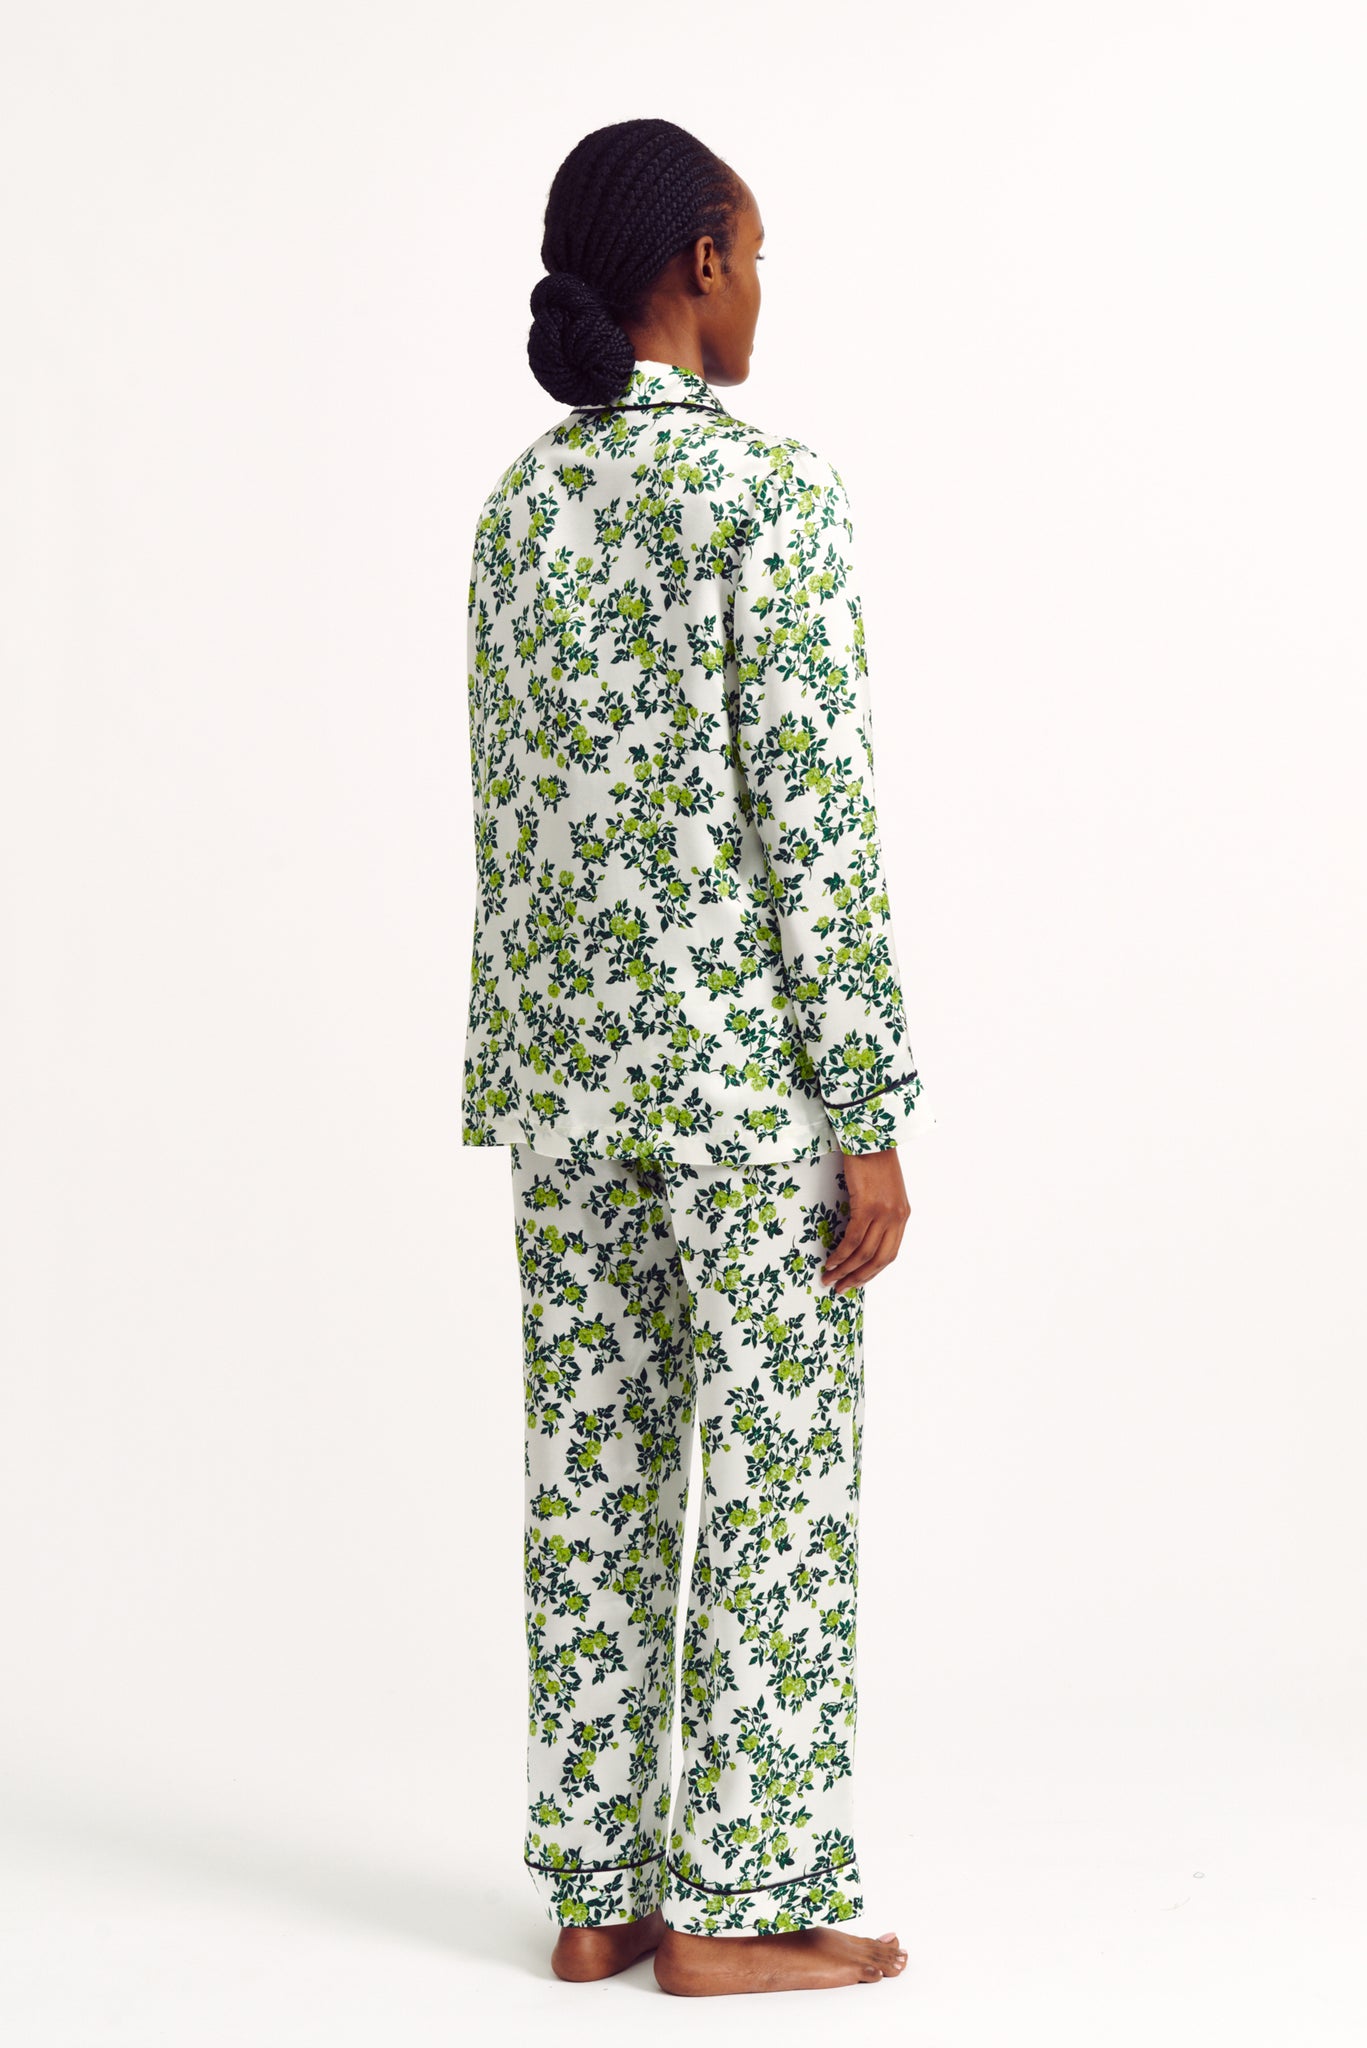 Trina Pyjama Blouse in Chartreuse Roses On Ivory Silk Satin